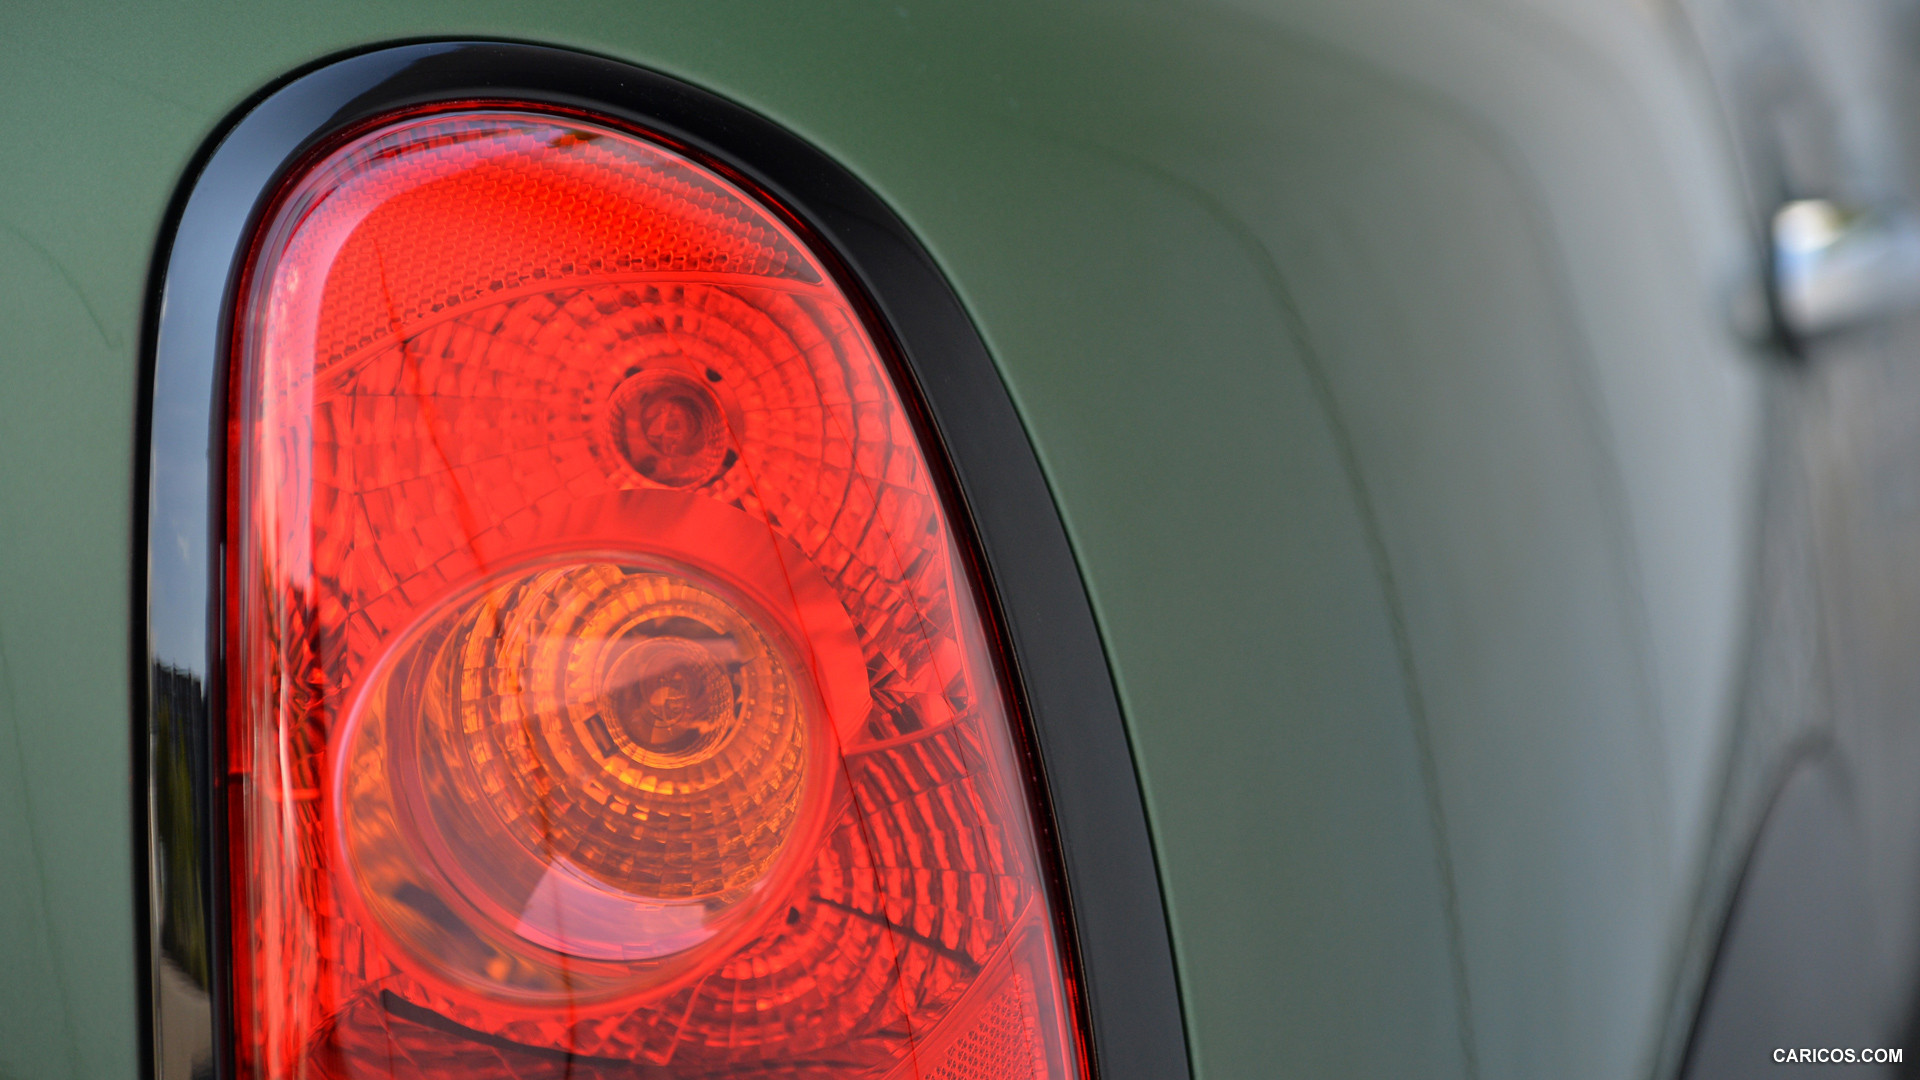 2015 MINI Cooper S Countryman  - Tail Light, #217 of 291